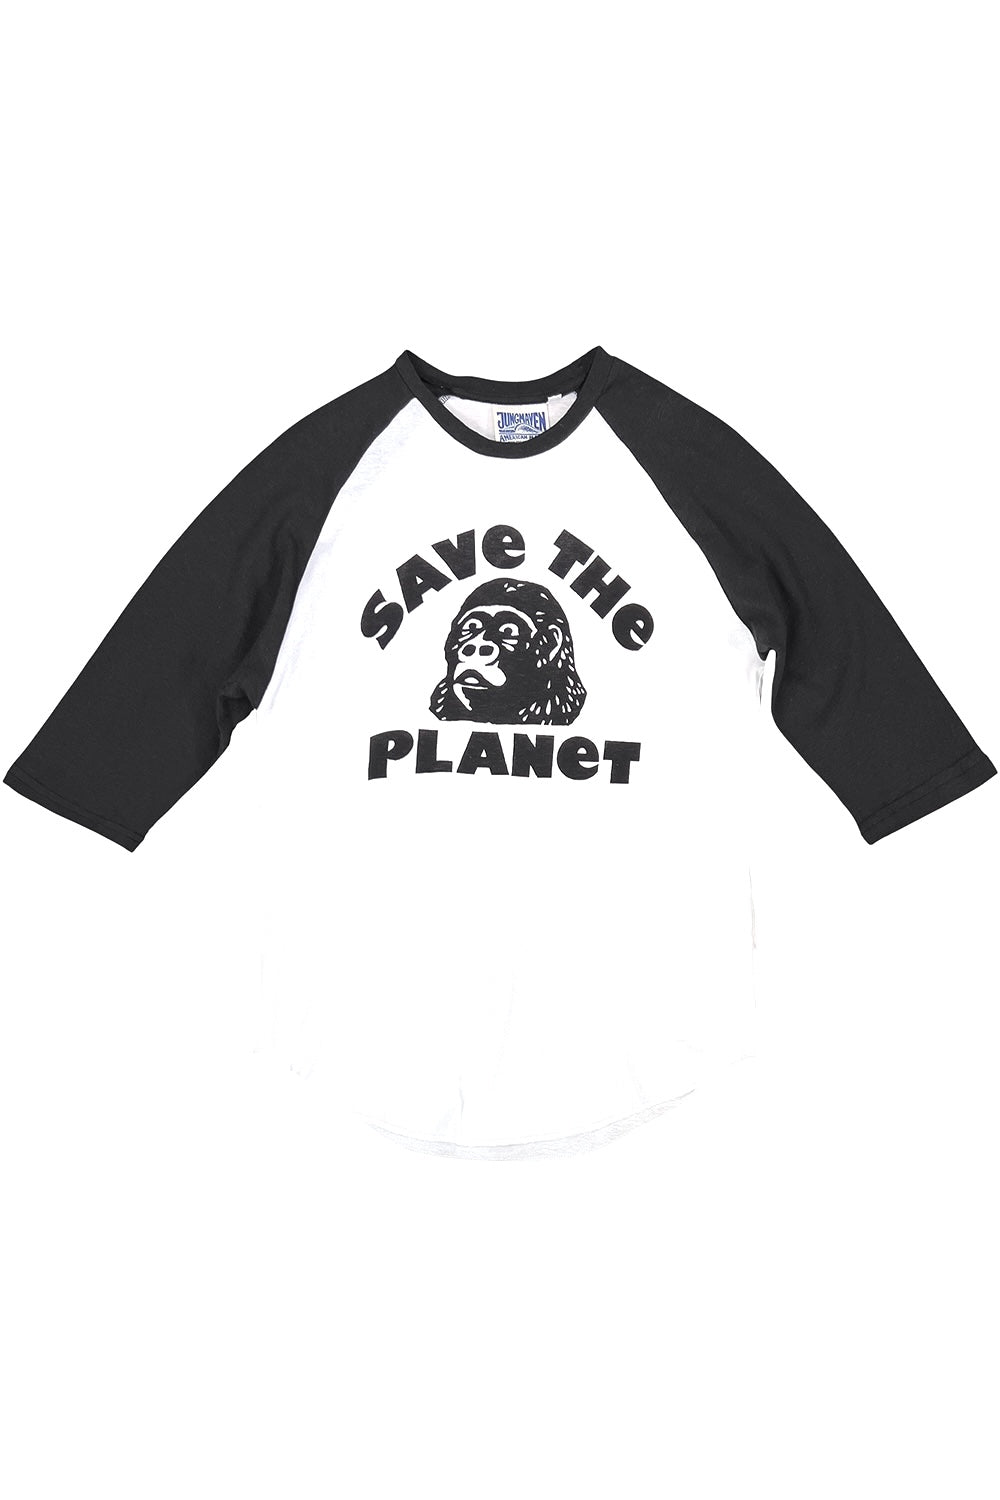 Save the Planet Stones 3/4 Sleeve Raglan | Jungmaven Hemp Clothing & Accessories / Color: Black Sleeve/White Body